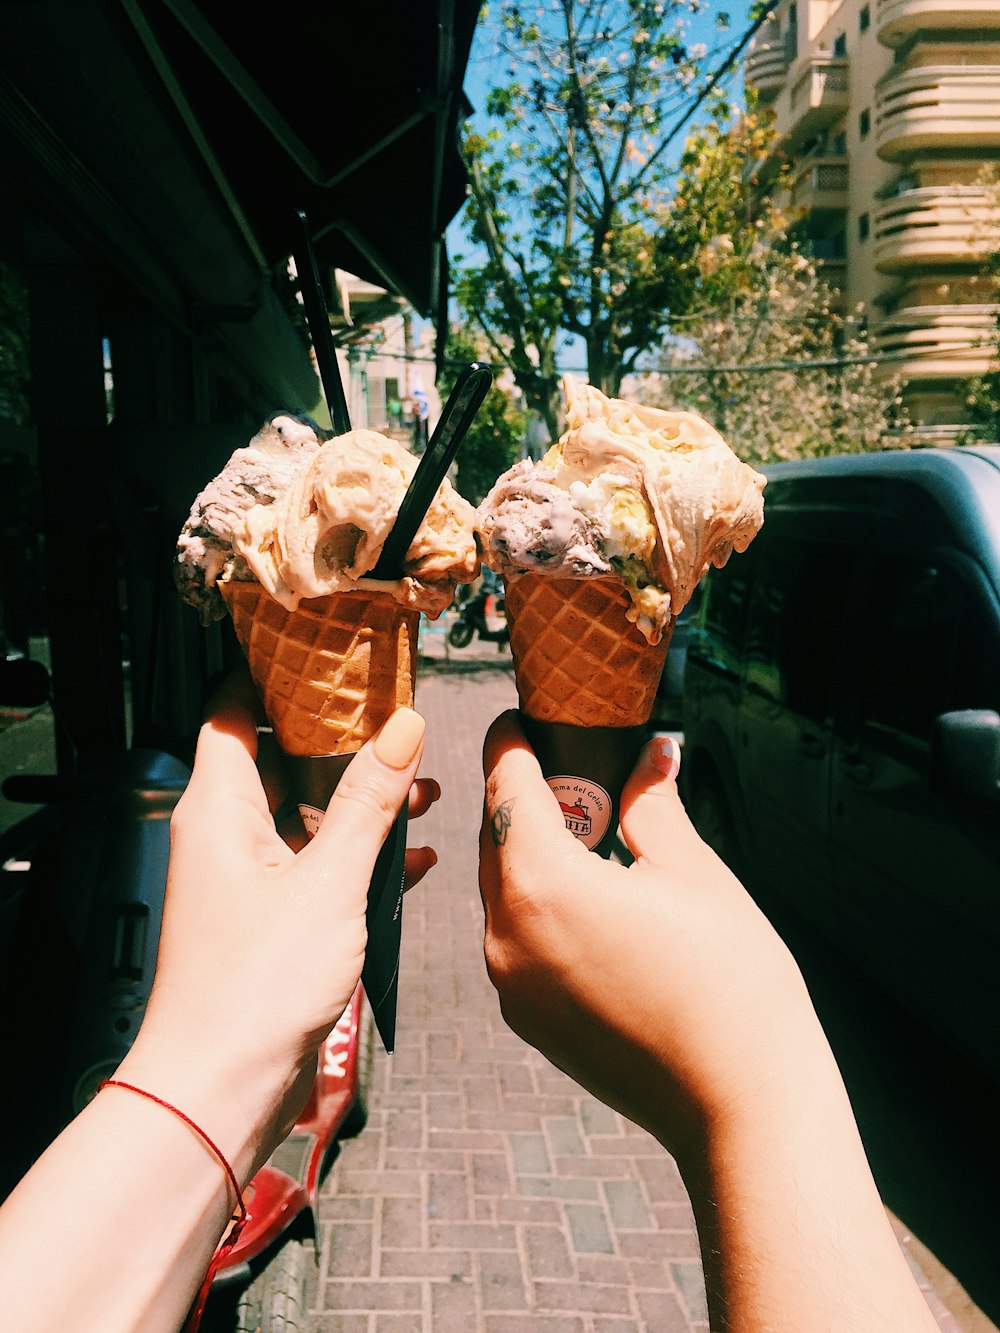 dois cones de sorvetes